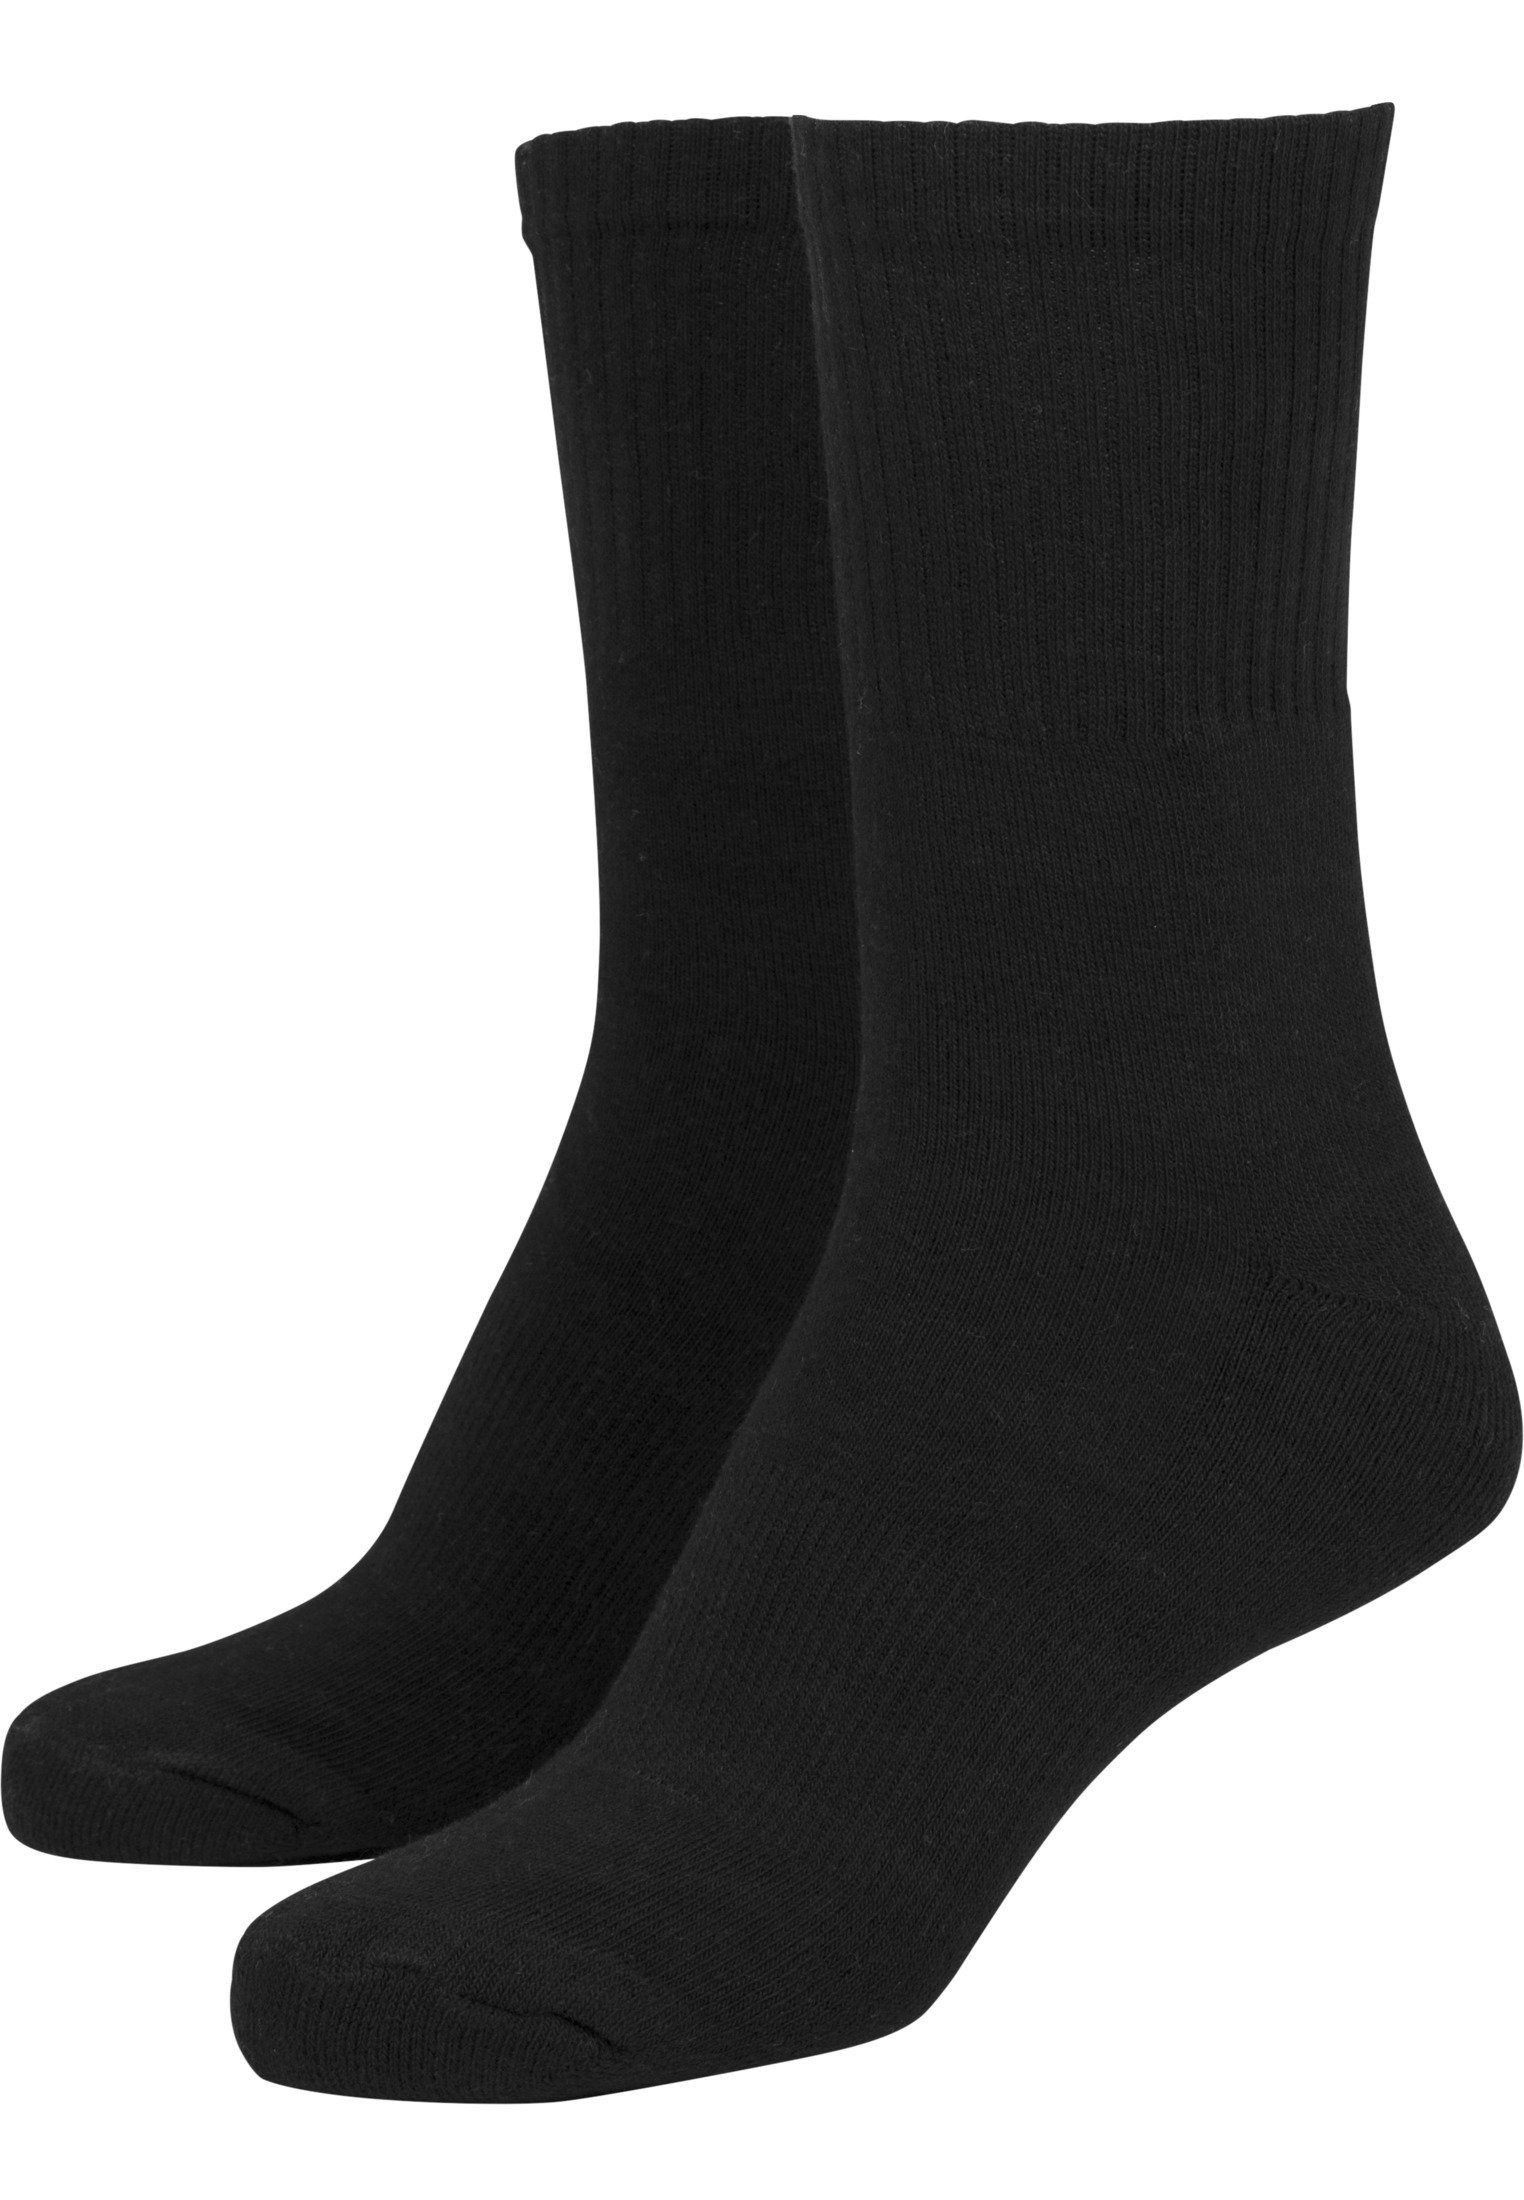 URBAN Sport black CLASSICS Socks 3-Pack Freizeitsocken (1-Paar) Accessoires